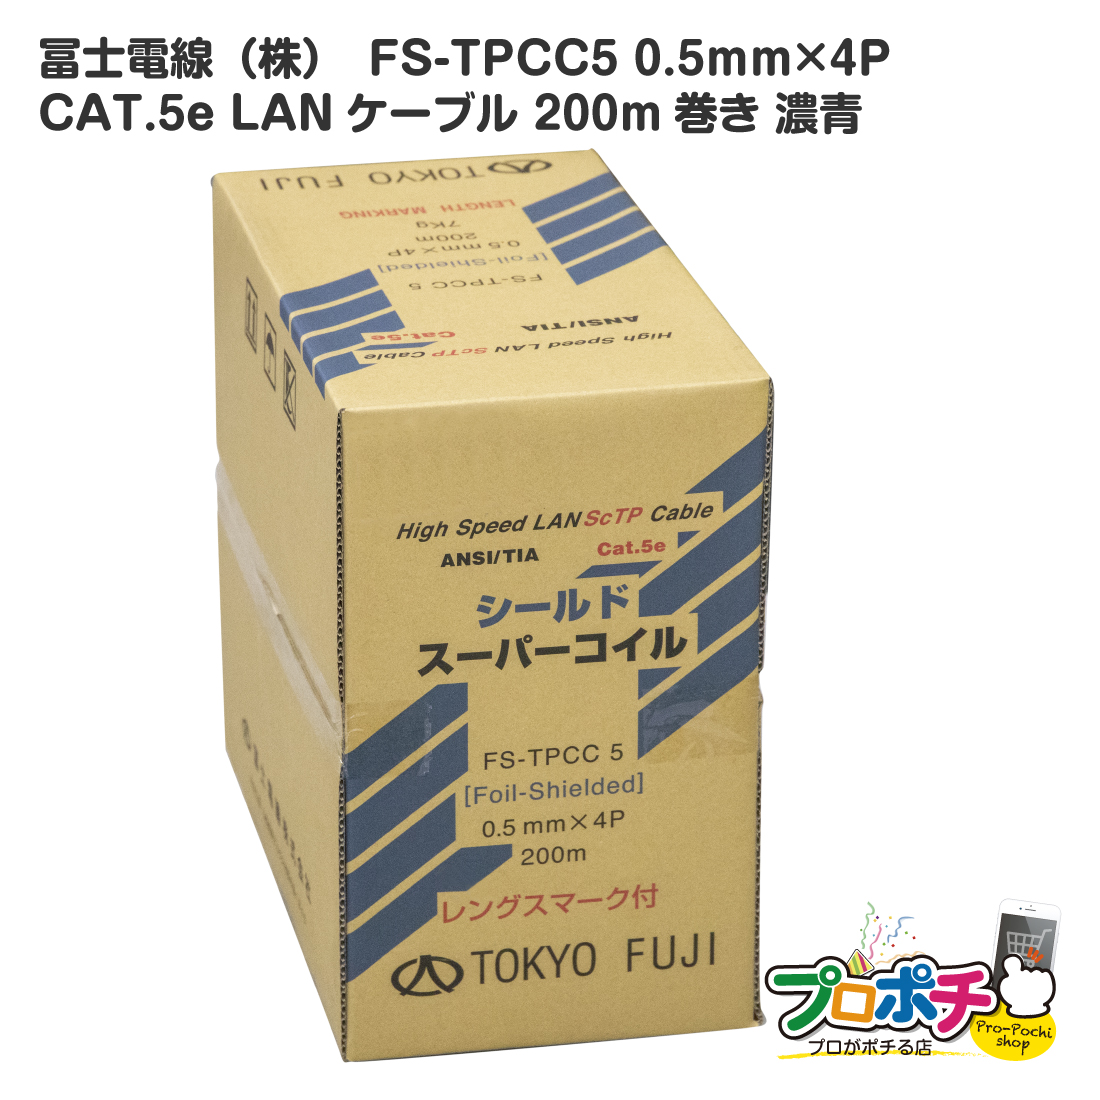 冨士電線 Cat6 LANケーブル 300m巻 TPCC6 0.5mm x 4P 紫-